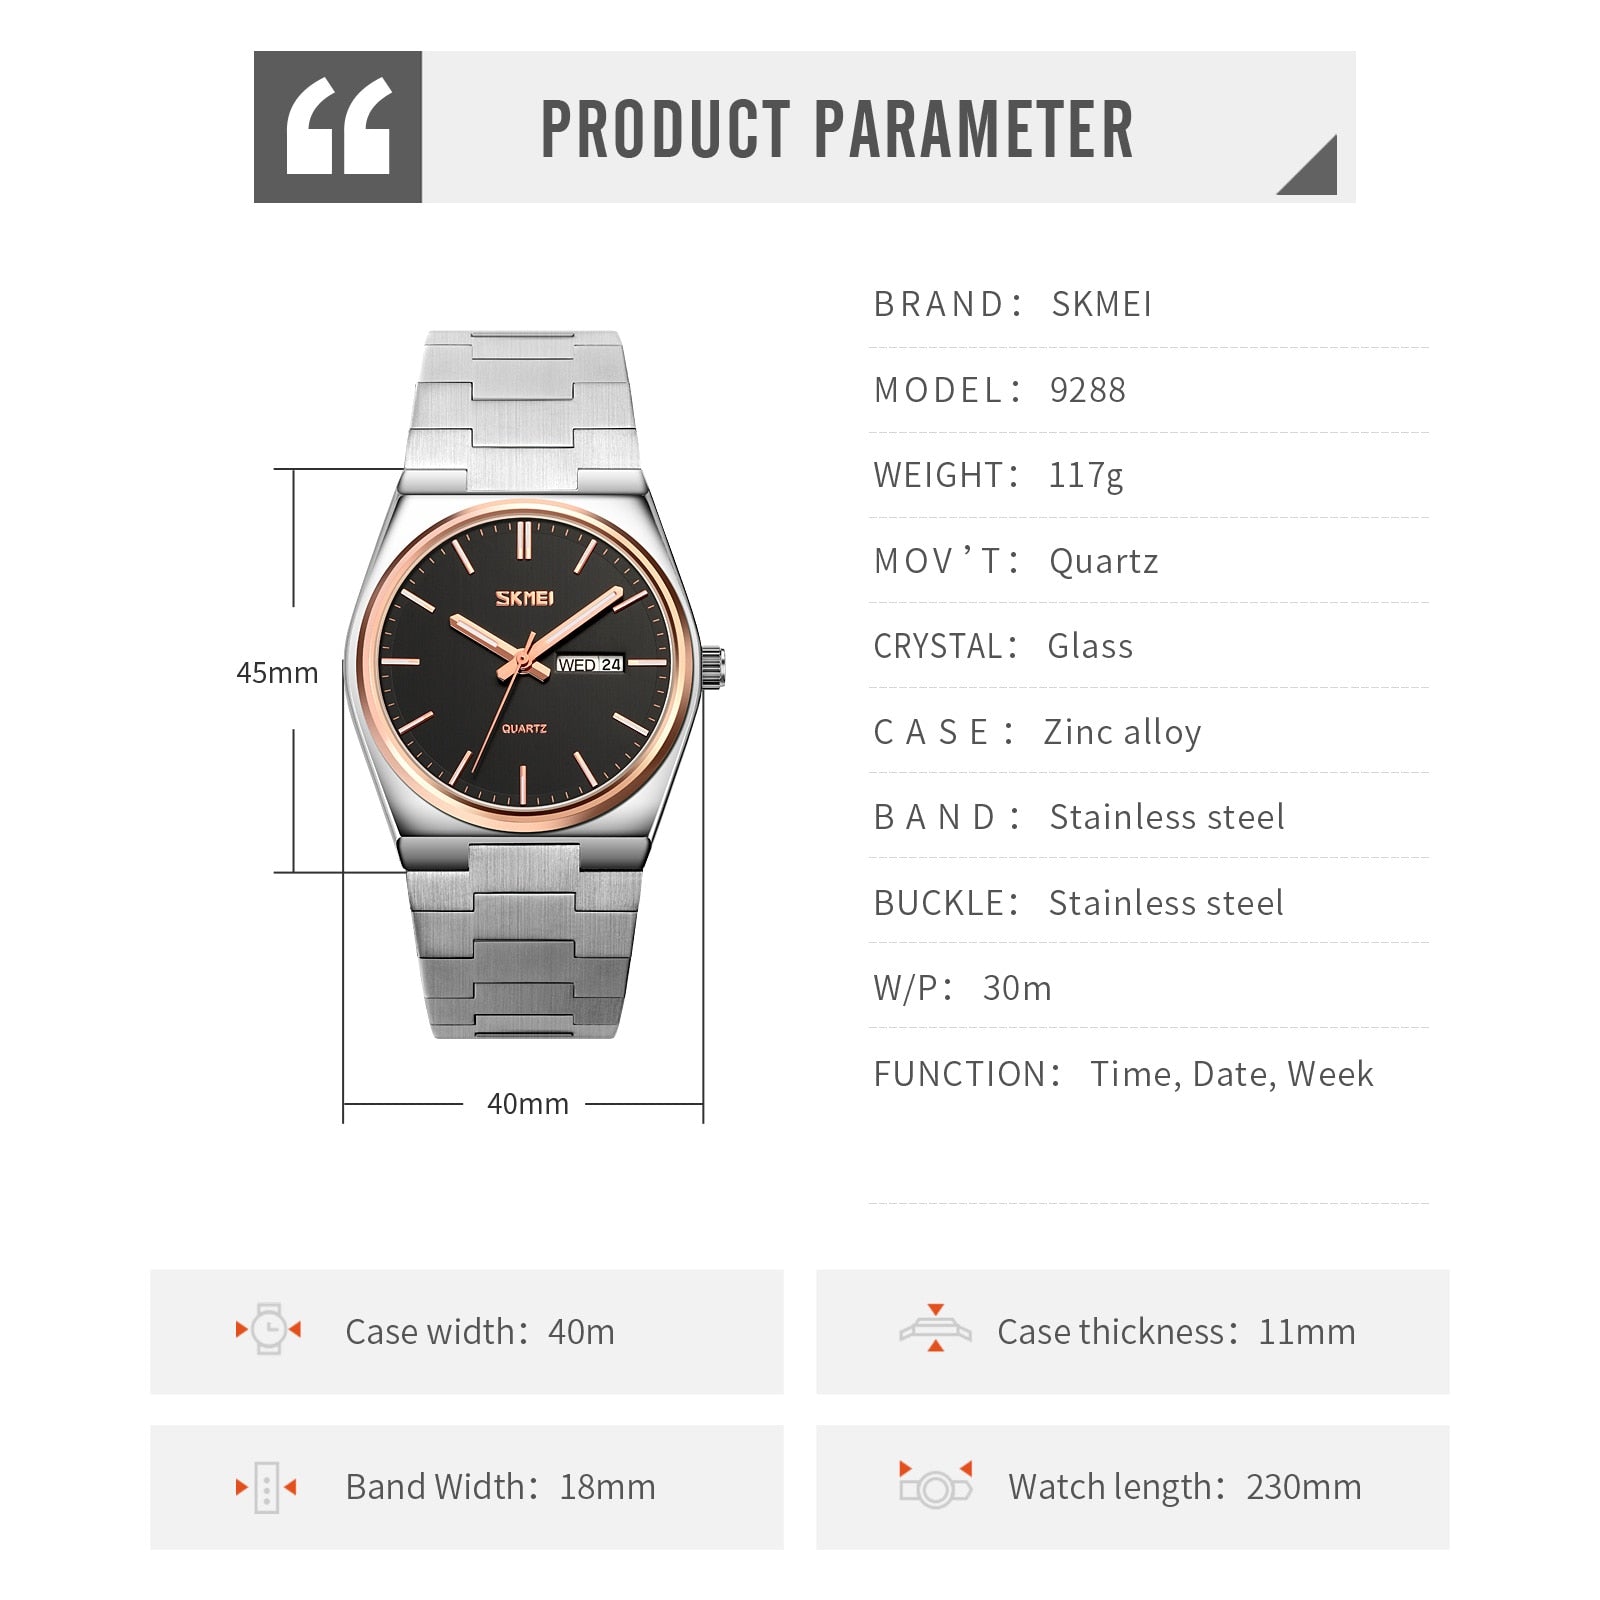 SKMEI Luxury Stainless Steel Strap Watches Men Quartz Movement Wristwatch Calendar Clock Relogs Para Hombre